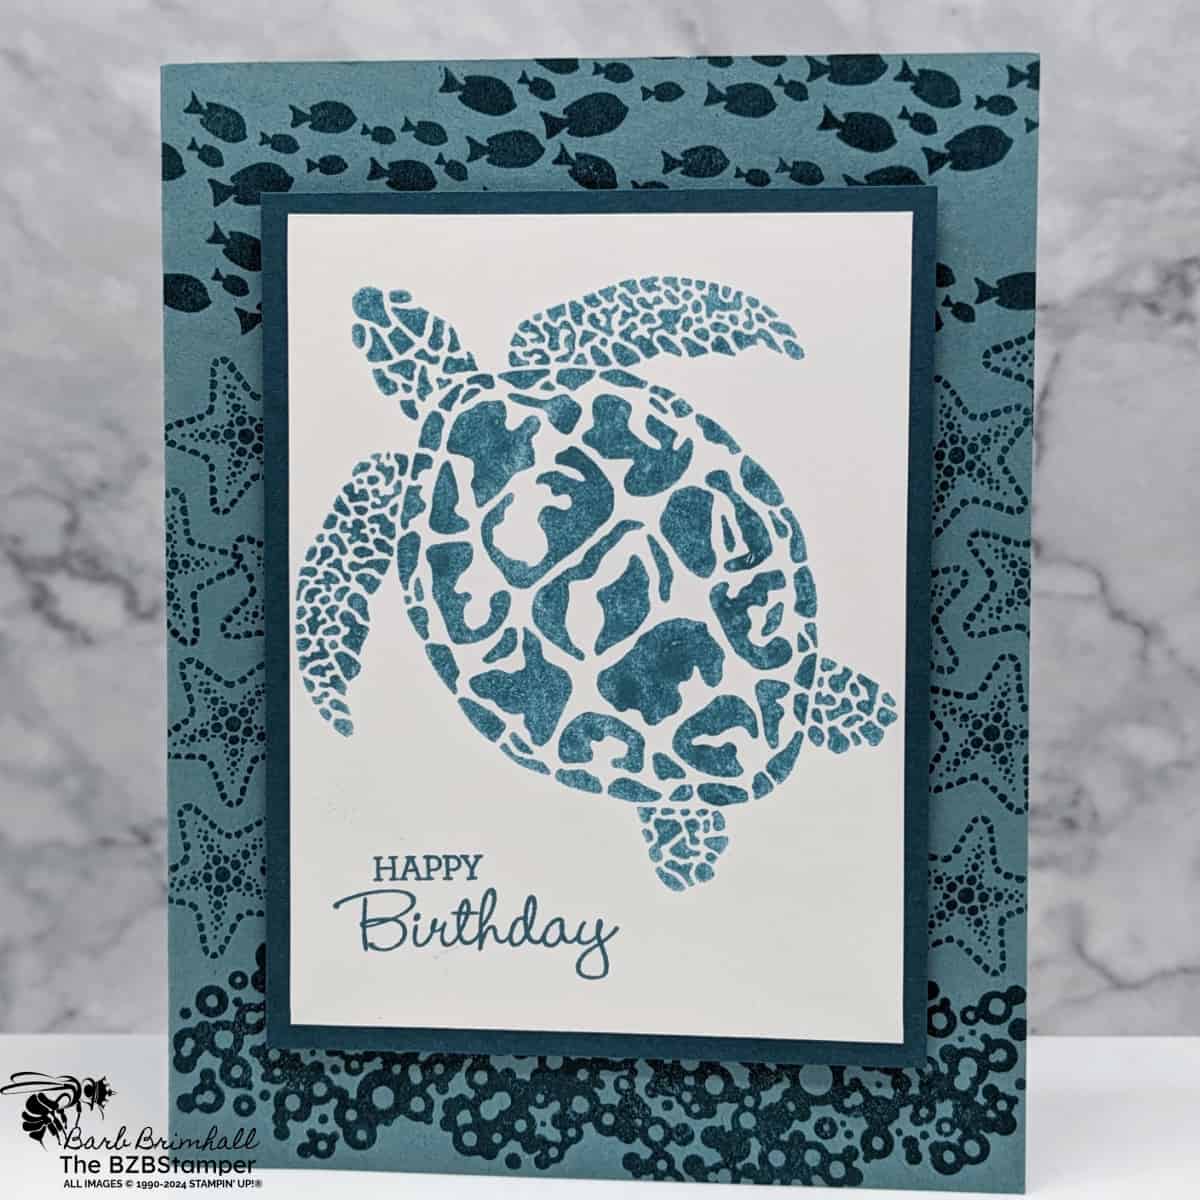 Celebrating Birthdays with the Sea Turtle Stamp Set